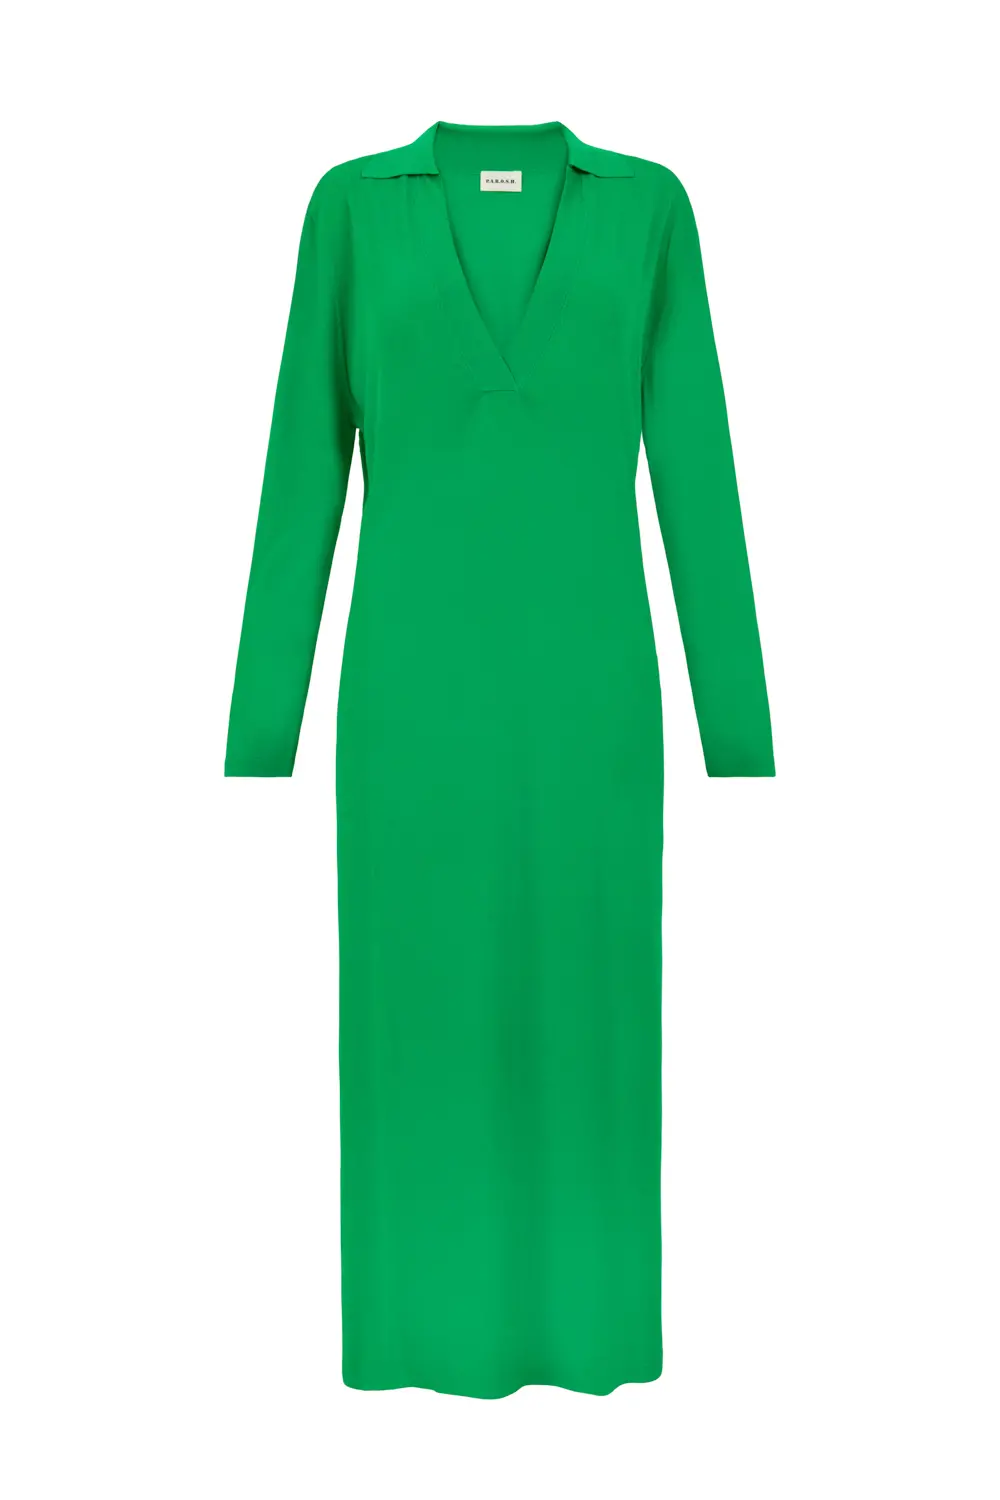 P.A.R.O.S.H. sequin-embellished short-sleeved dress - Green